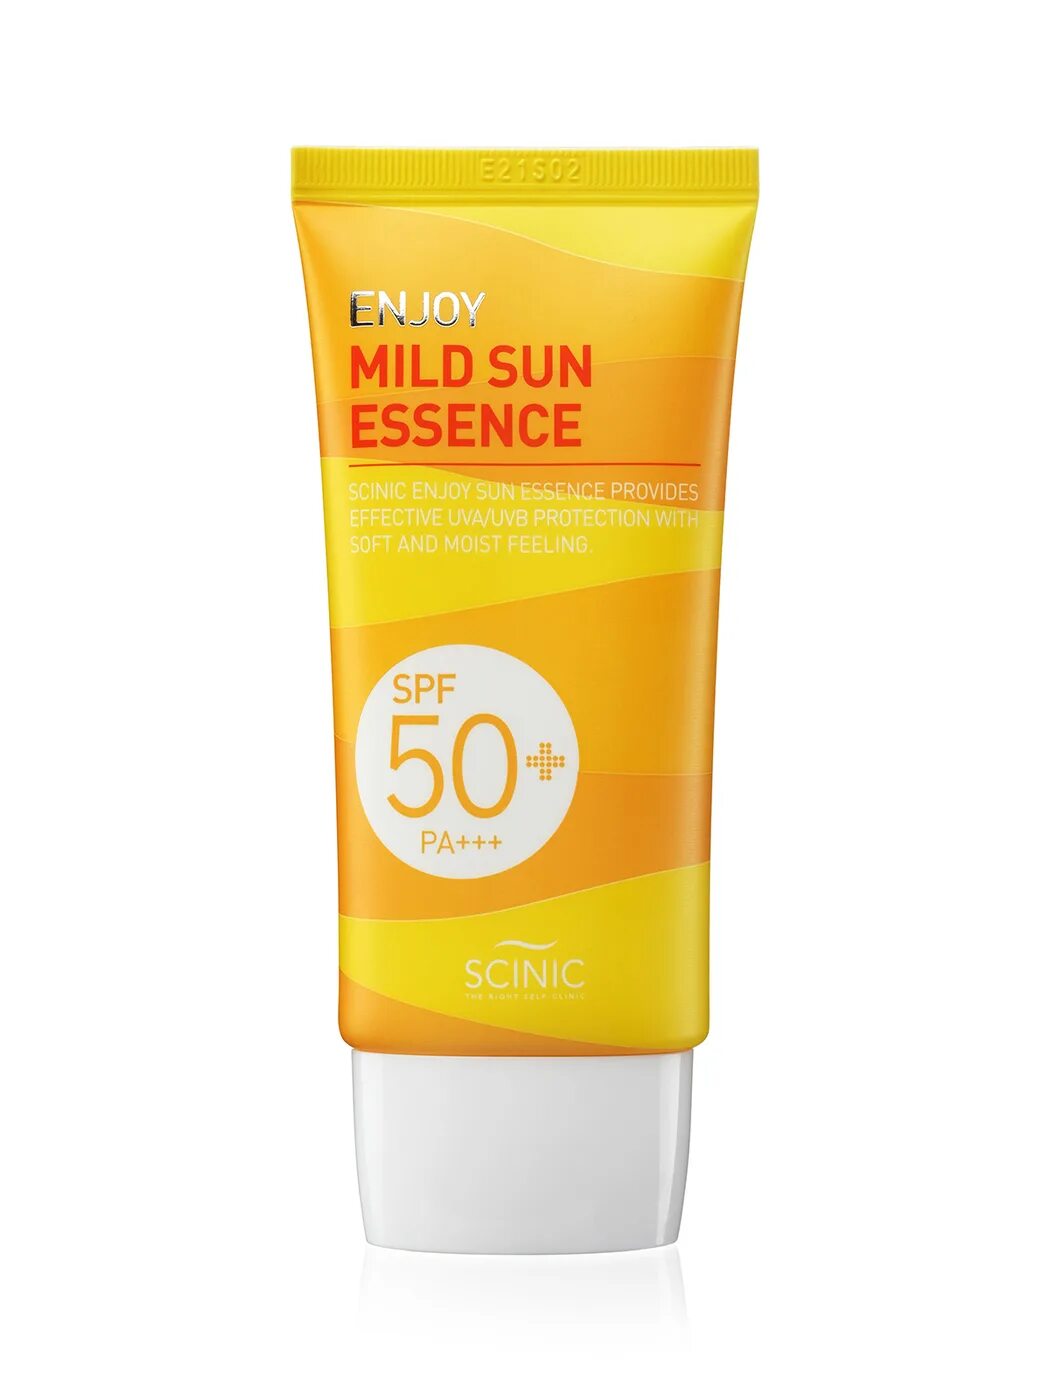 Essence spf50+. Scinic enjoy mild Sun Essence ex spf50+ pa++++ солнцезащитная эссенция. Солнцезащитный крем для кожи лица и тела (SPF 50 pa+++) Scinic. Солнцезащитный крем spf50+/pa+++.